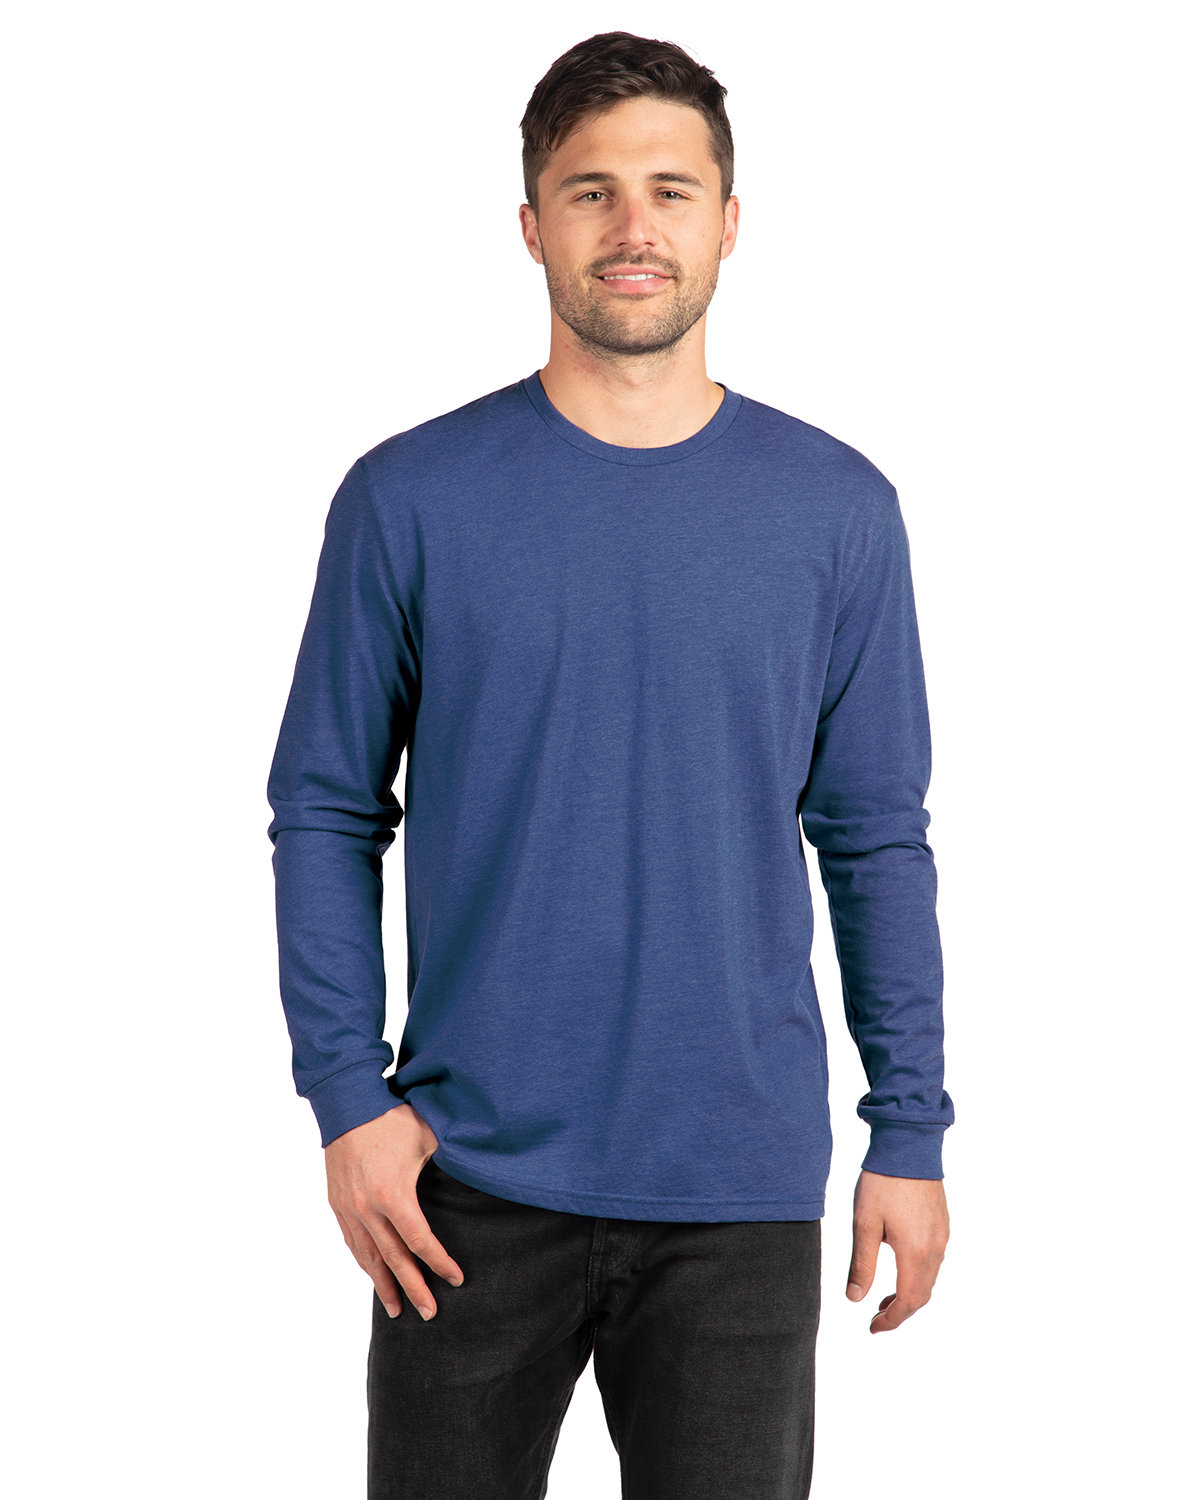 Next Level Apparel Unisex CVC Long-Sleeve T-Shirt ROYAL 